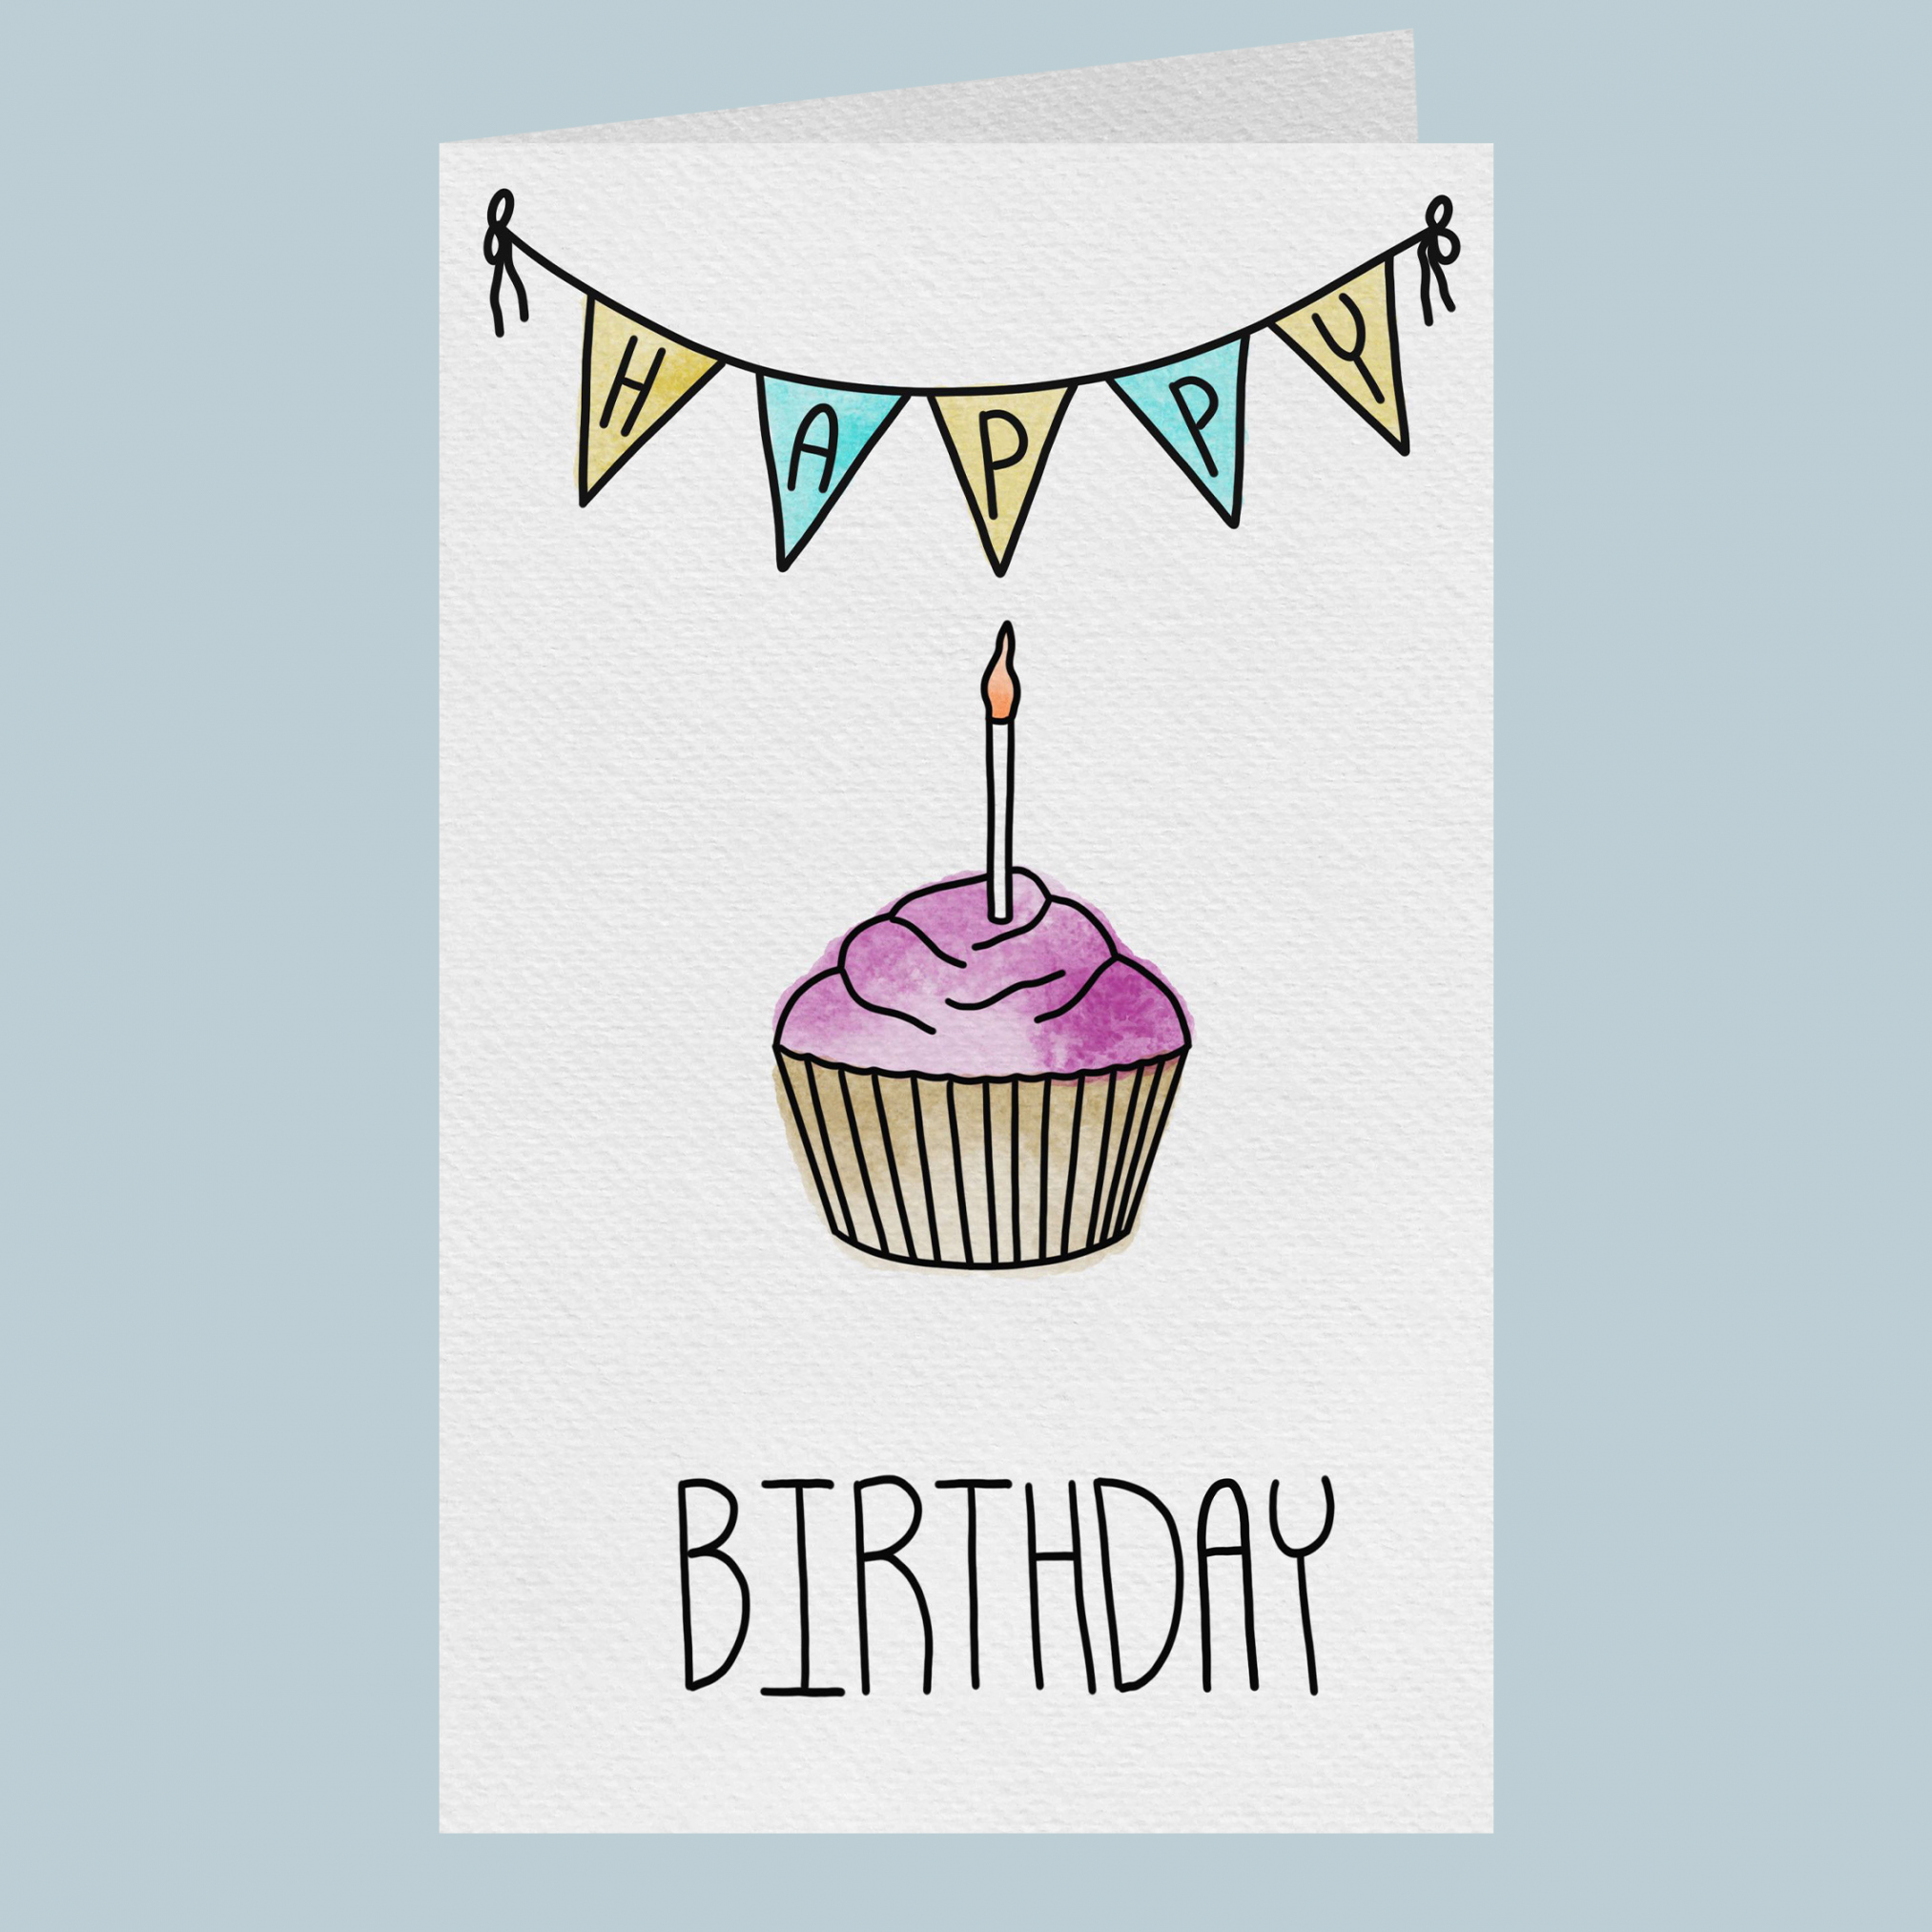 Free Printable Birthday Cards For Adults - Printable - Free Printable Cards   Birthday Card Downloads – Liz Kohler Brown